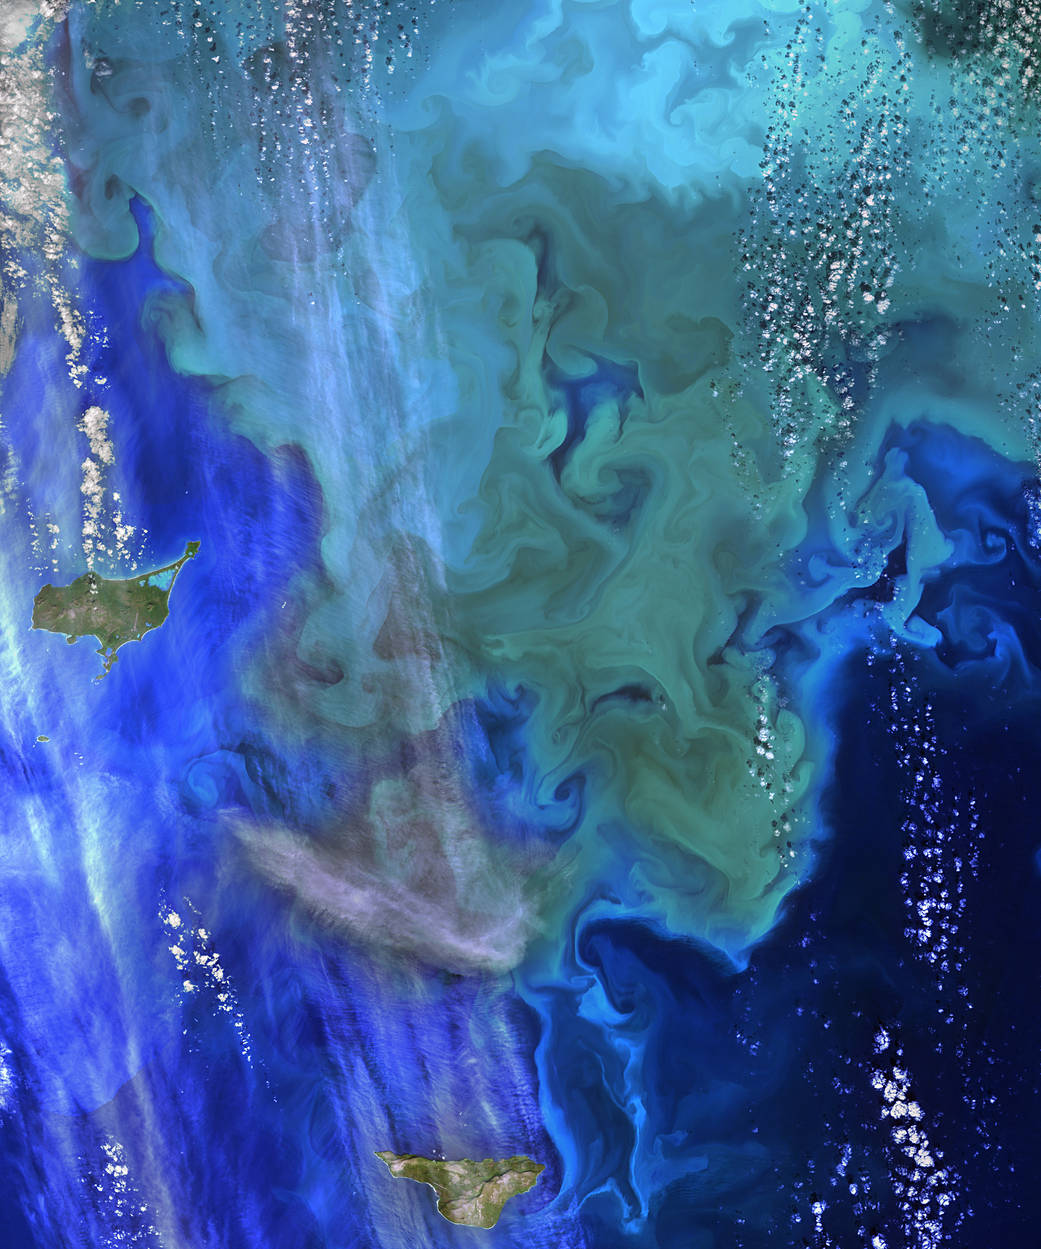 The Operational Land Imager (OLI) on Landsat 8 captured this view of a phytoplankton bloom near Alaska’s Pribilof Islands.